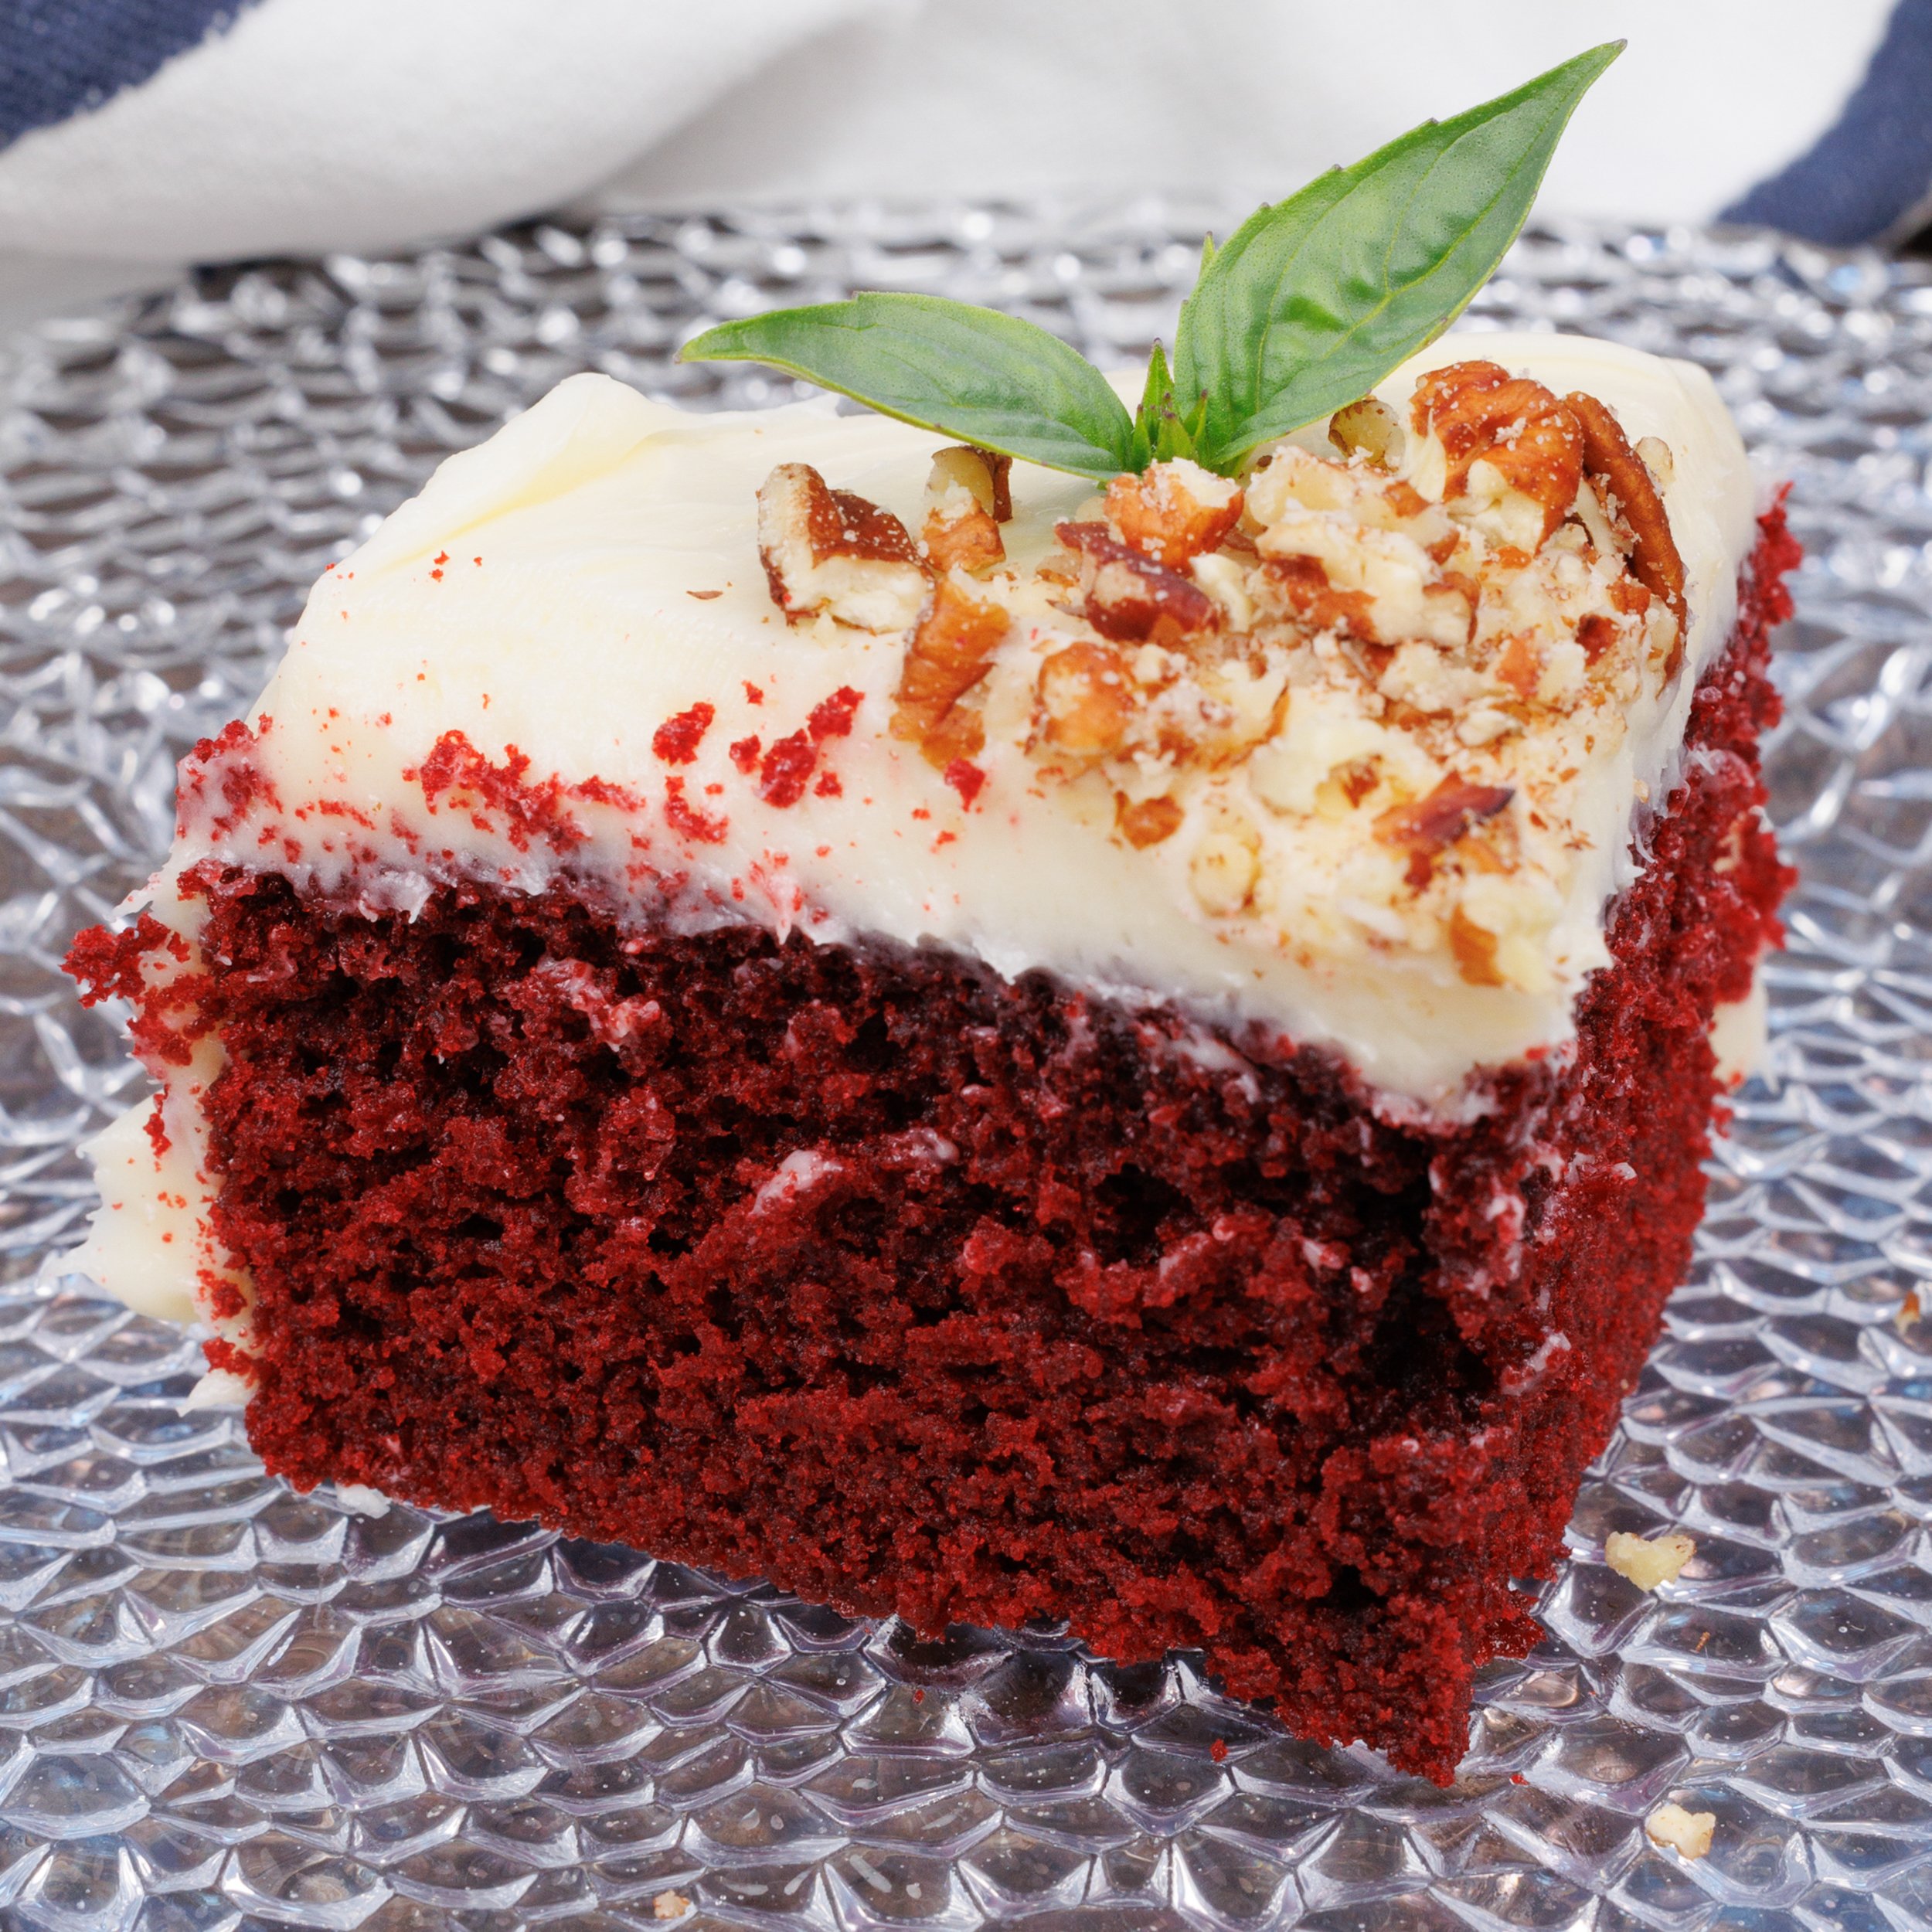 Mini Red Velvet Cake - One Dish Kitchen